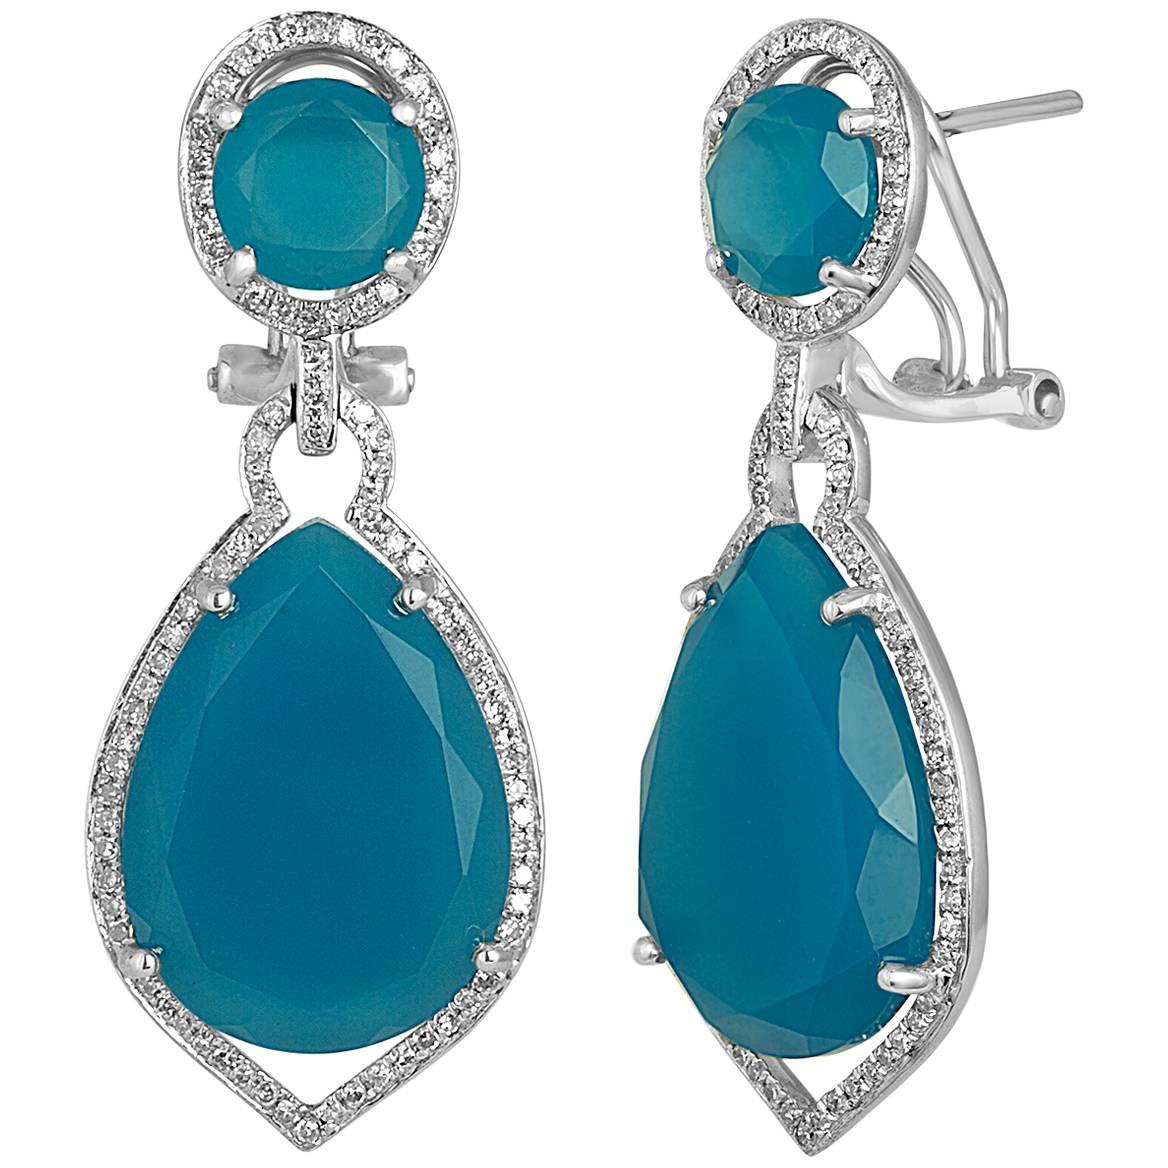 19.21 Carats Blue Agate Diamond Gold Earrings